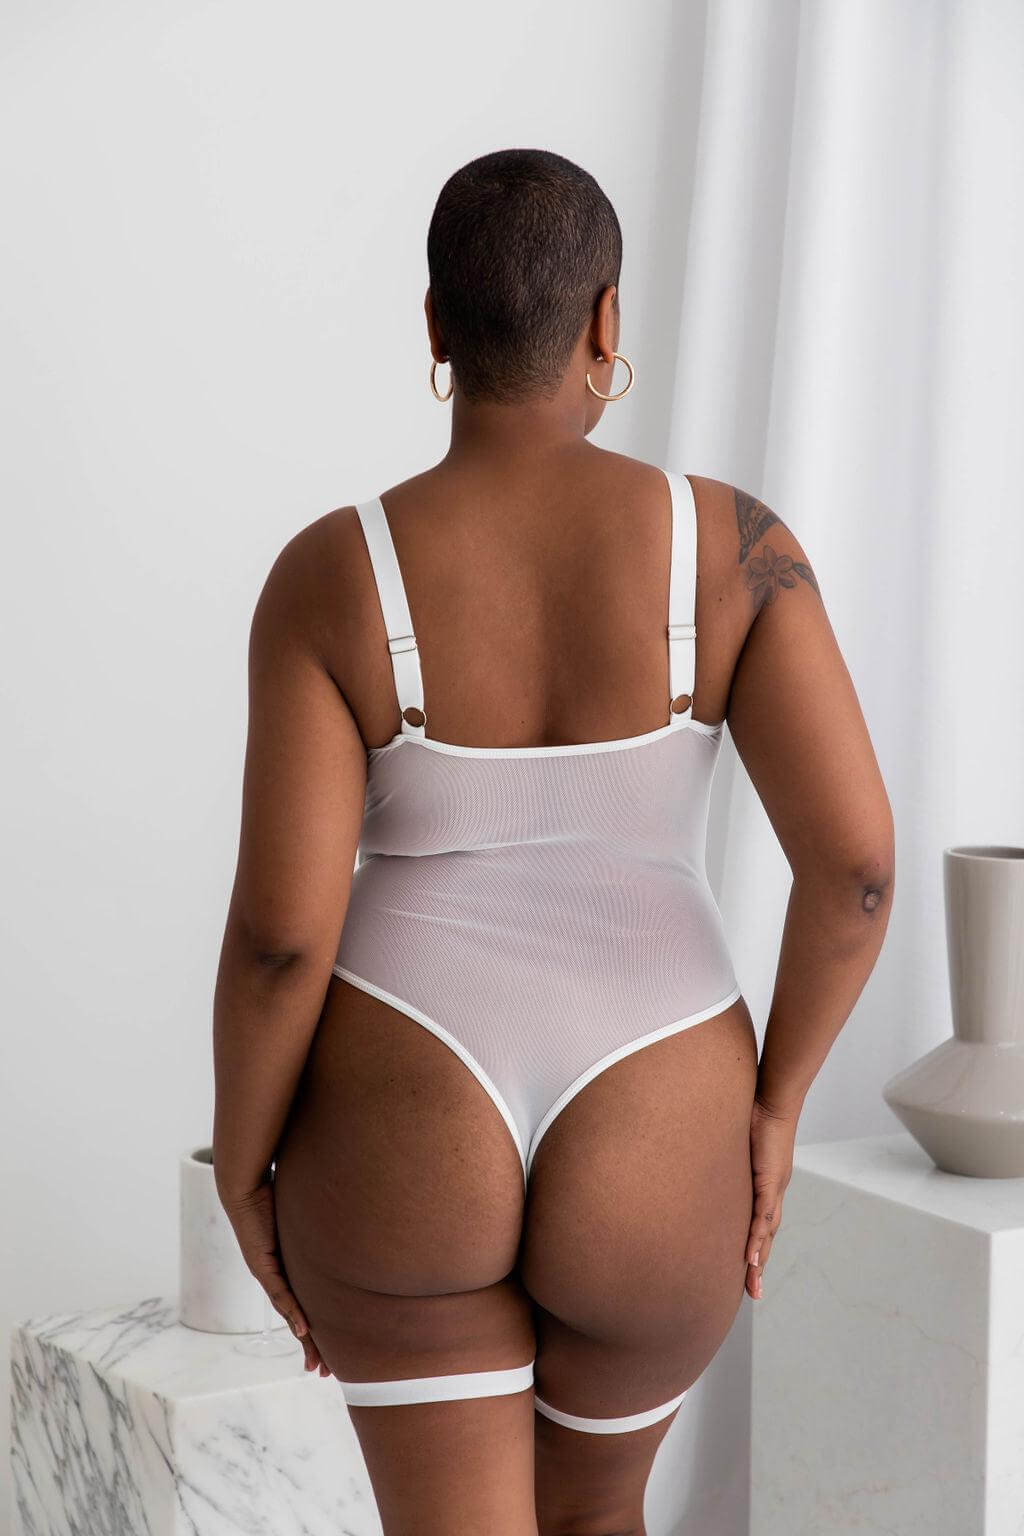 Aspen White Lace Bodysuit - $68.00 - Bodysuit - Naked Curve